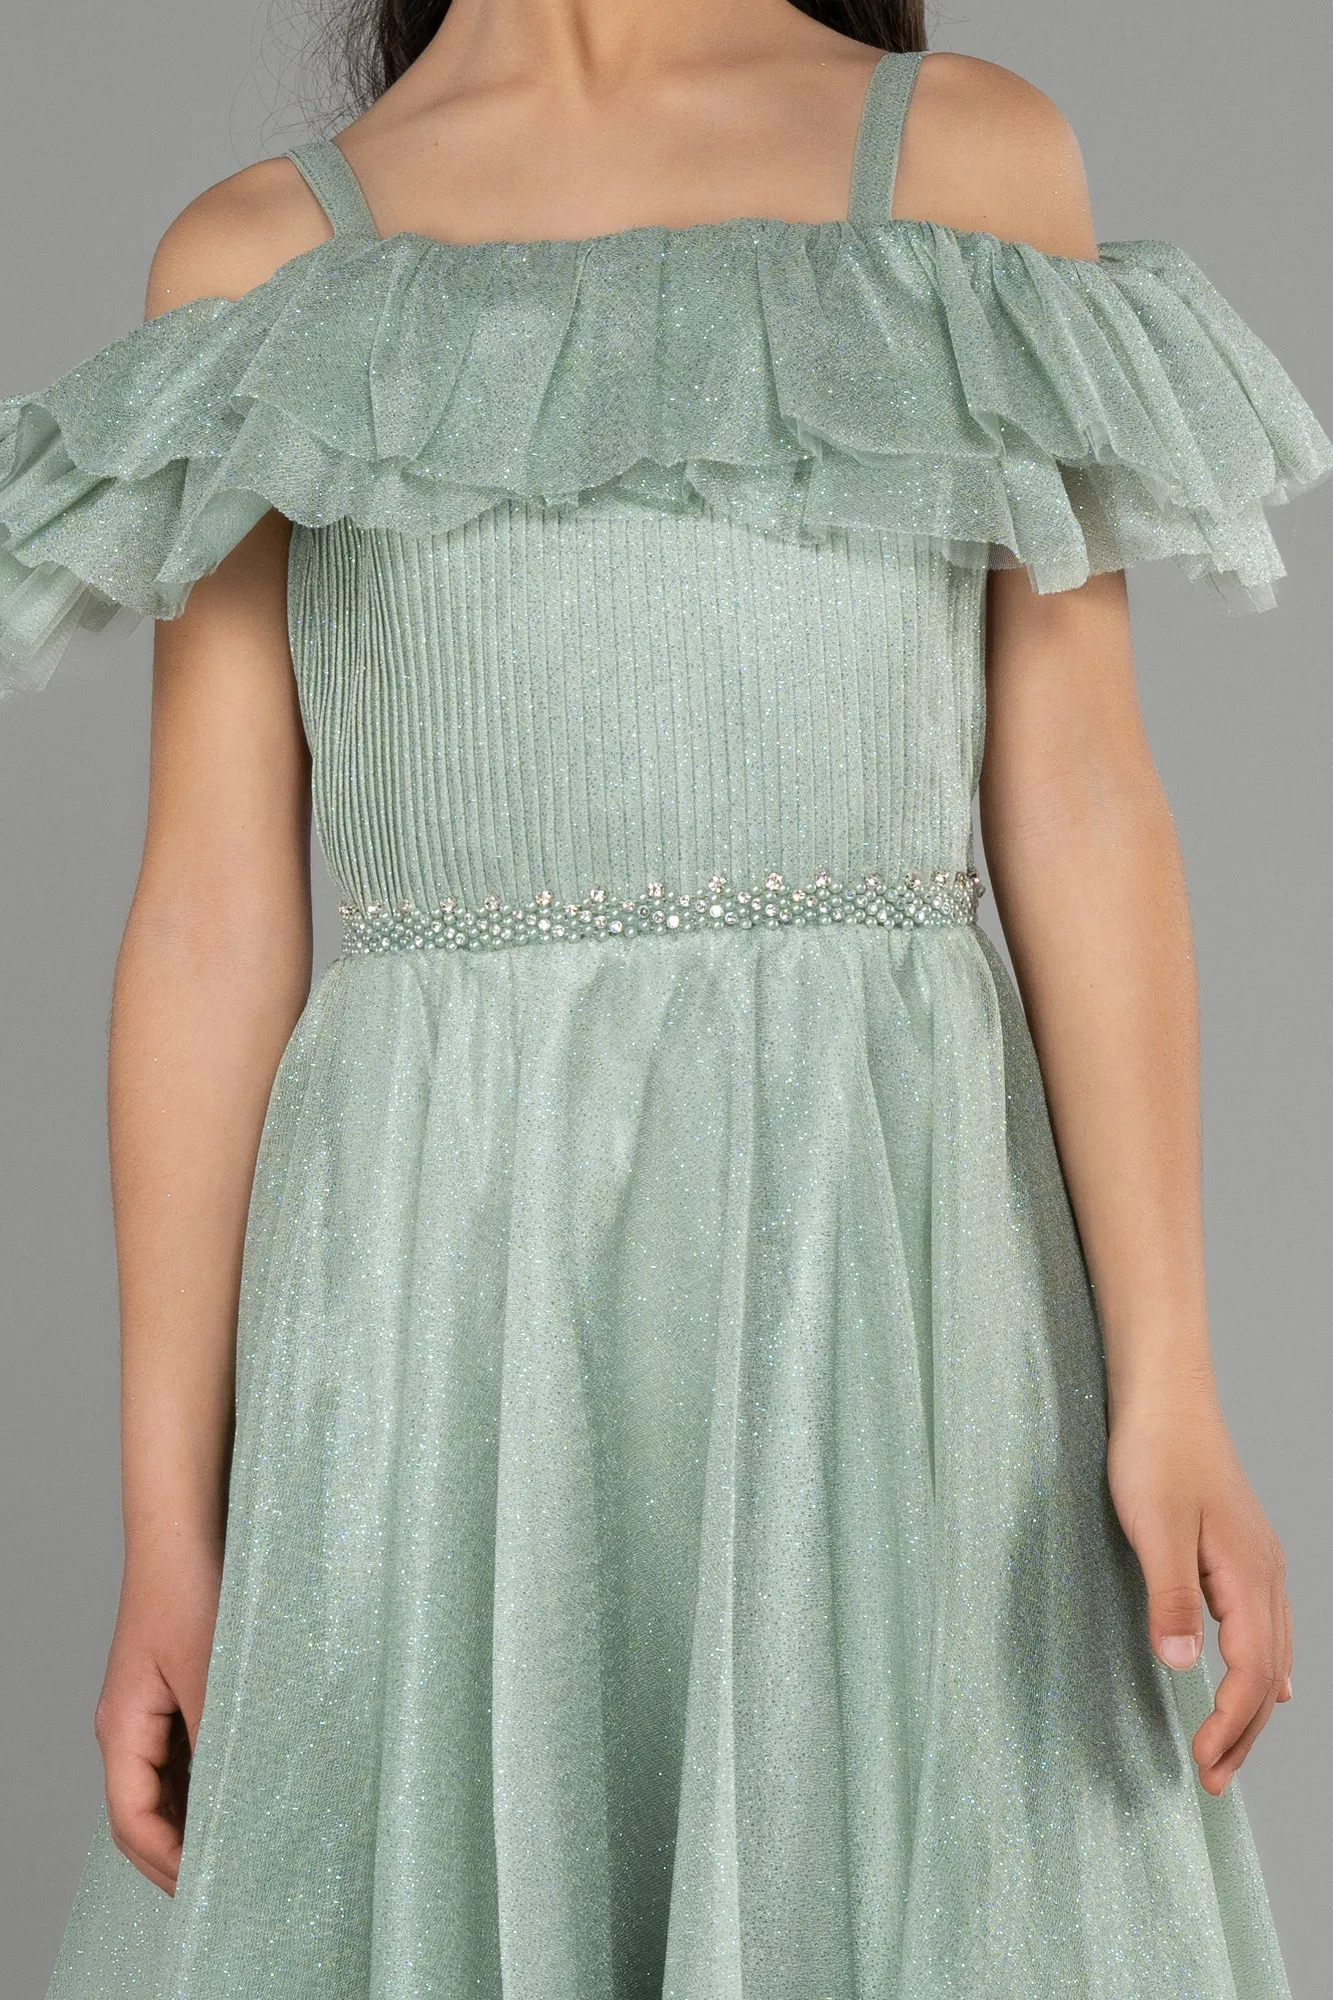 Turquoise-Long Girl Dress ABU3728